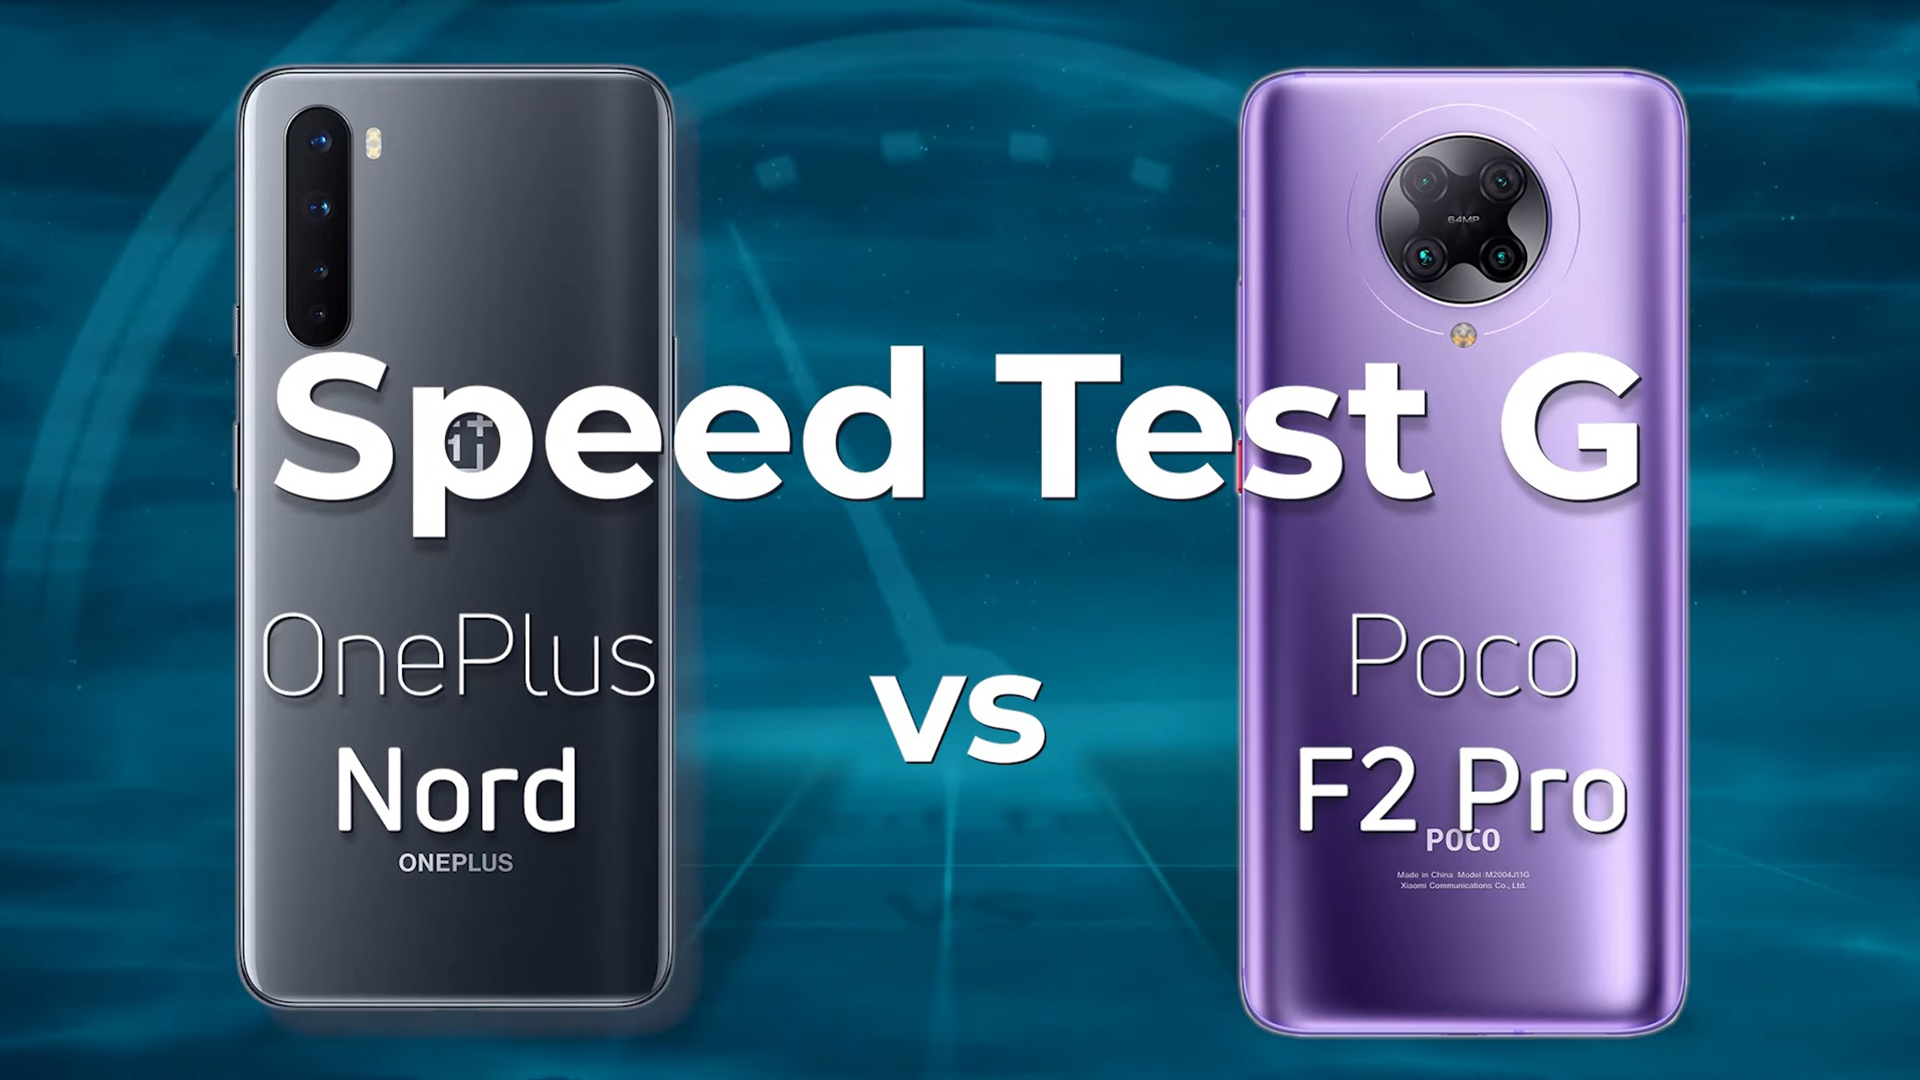 OnePlus Nord vs Poco F2 Pro Speed Test G